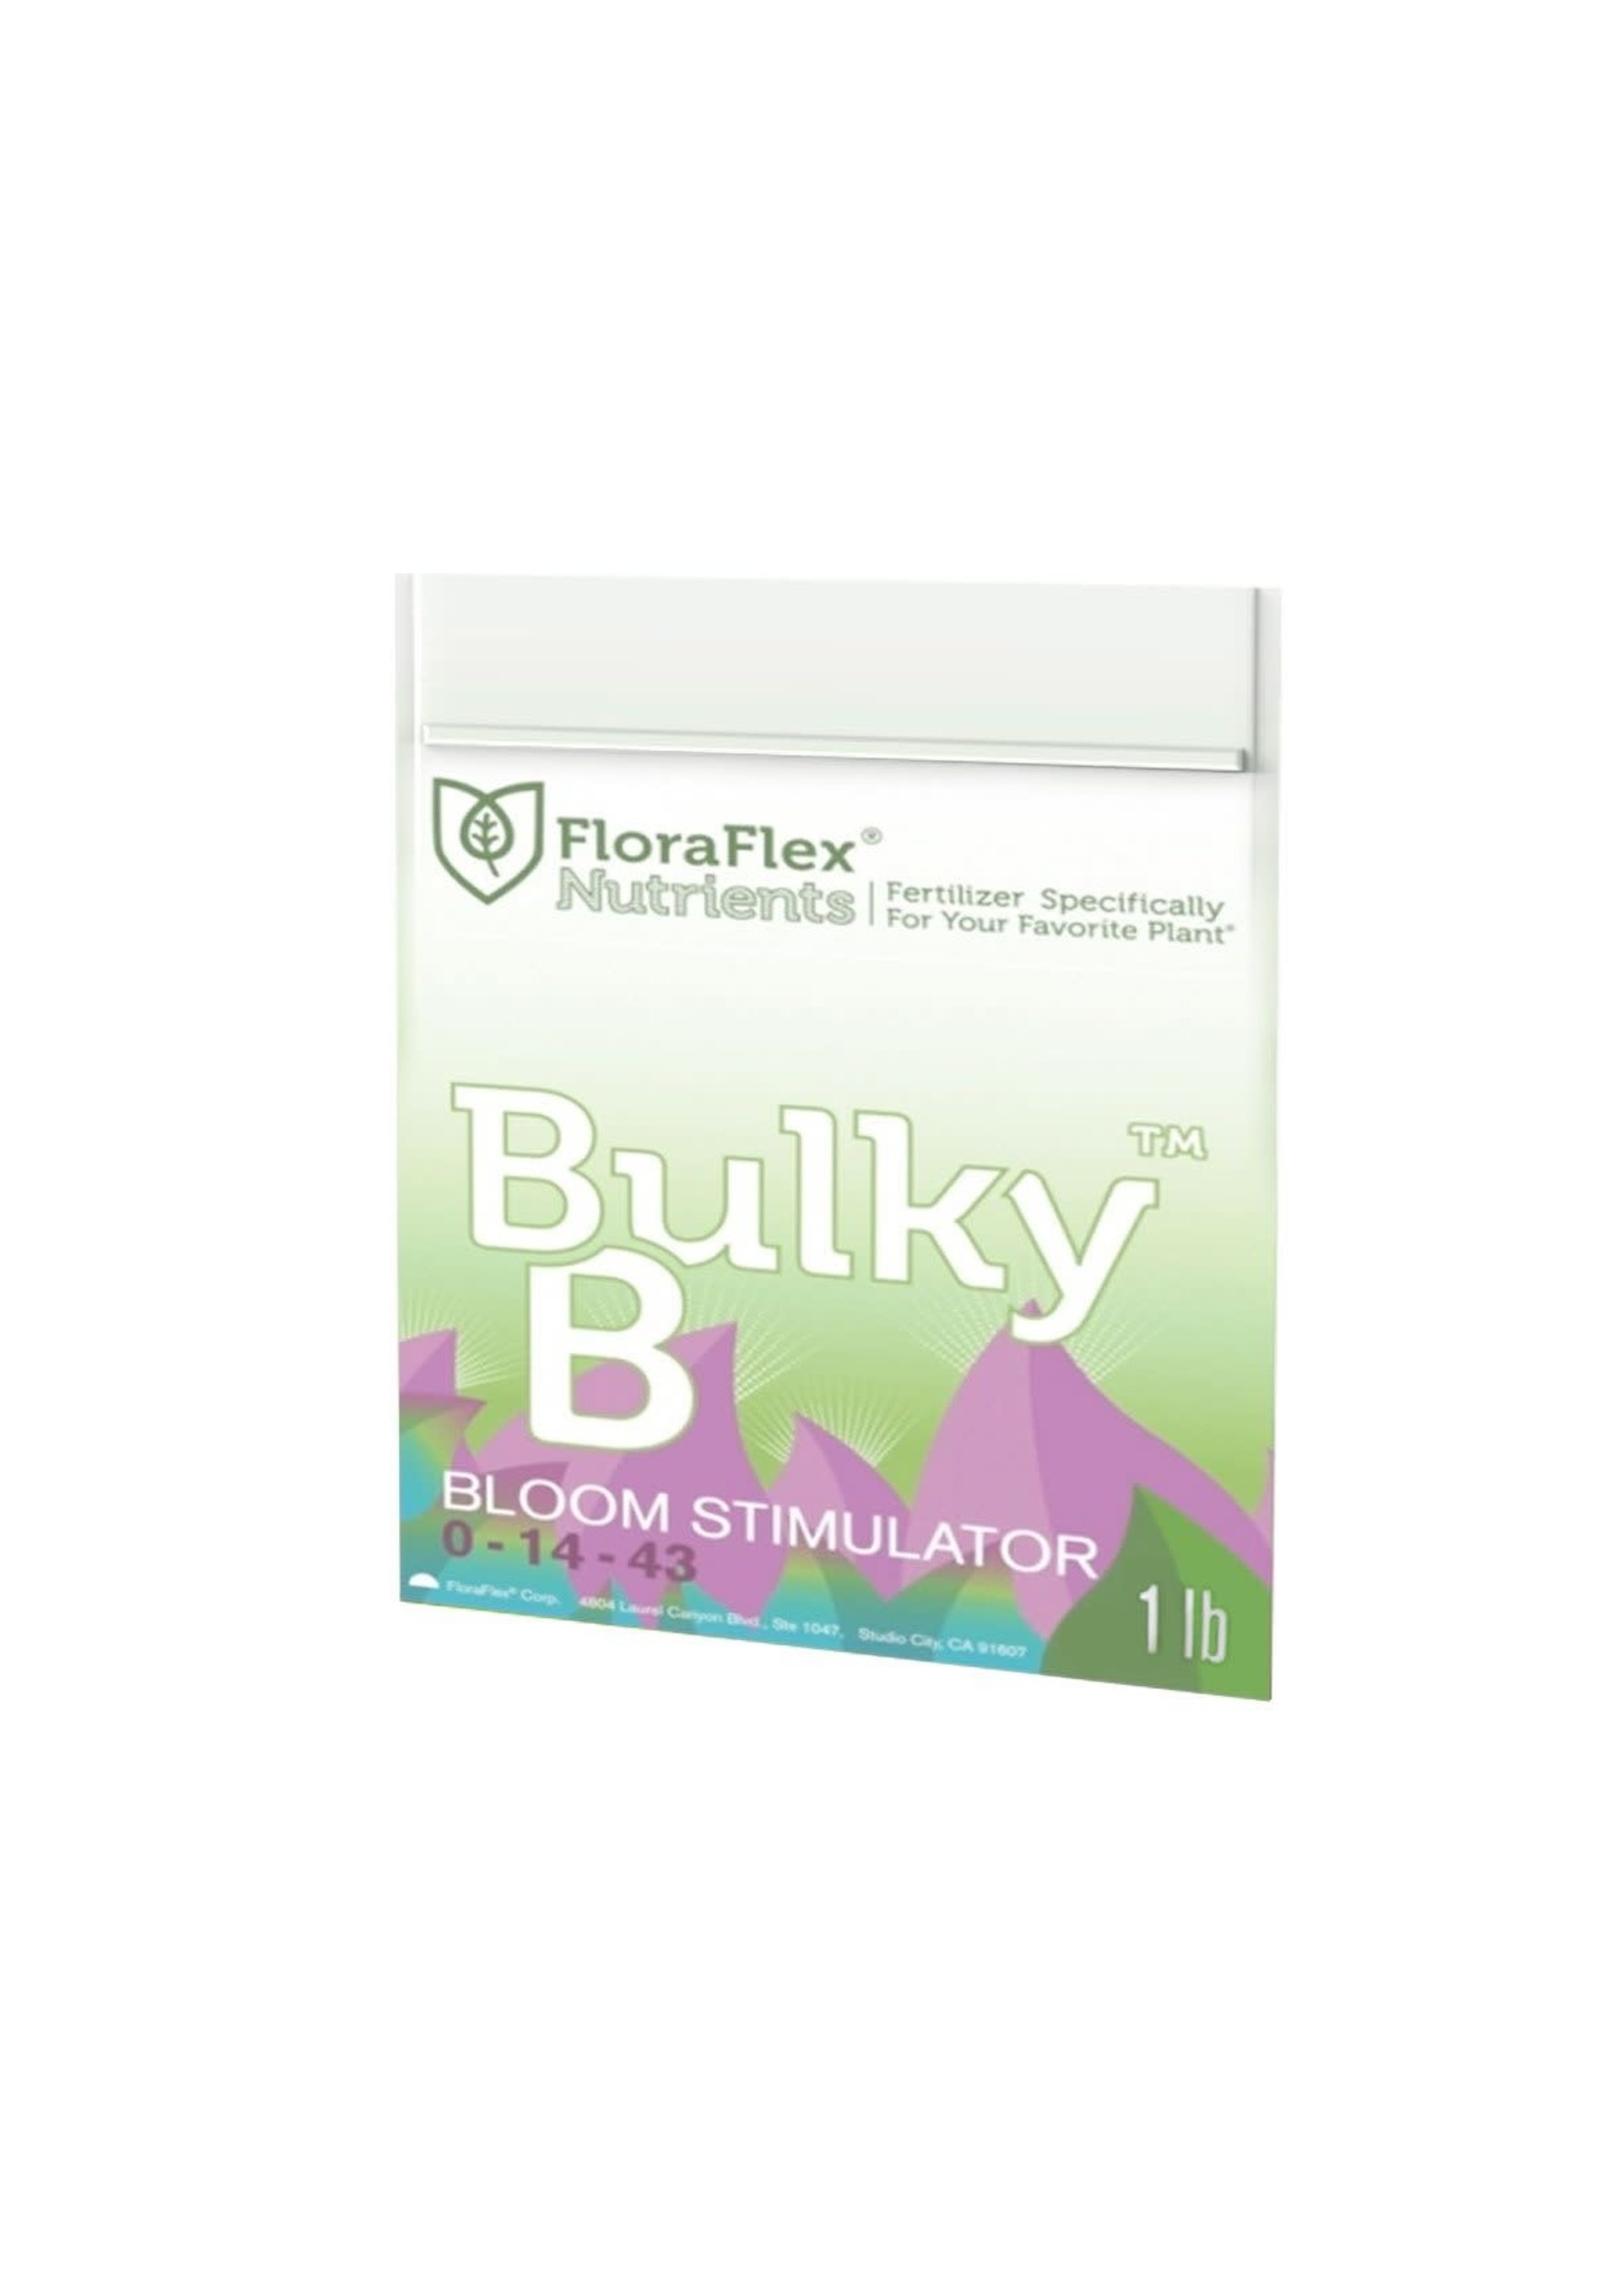 FloraFlex FloraFlex Bulky B 1lb